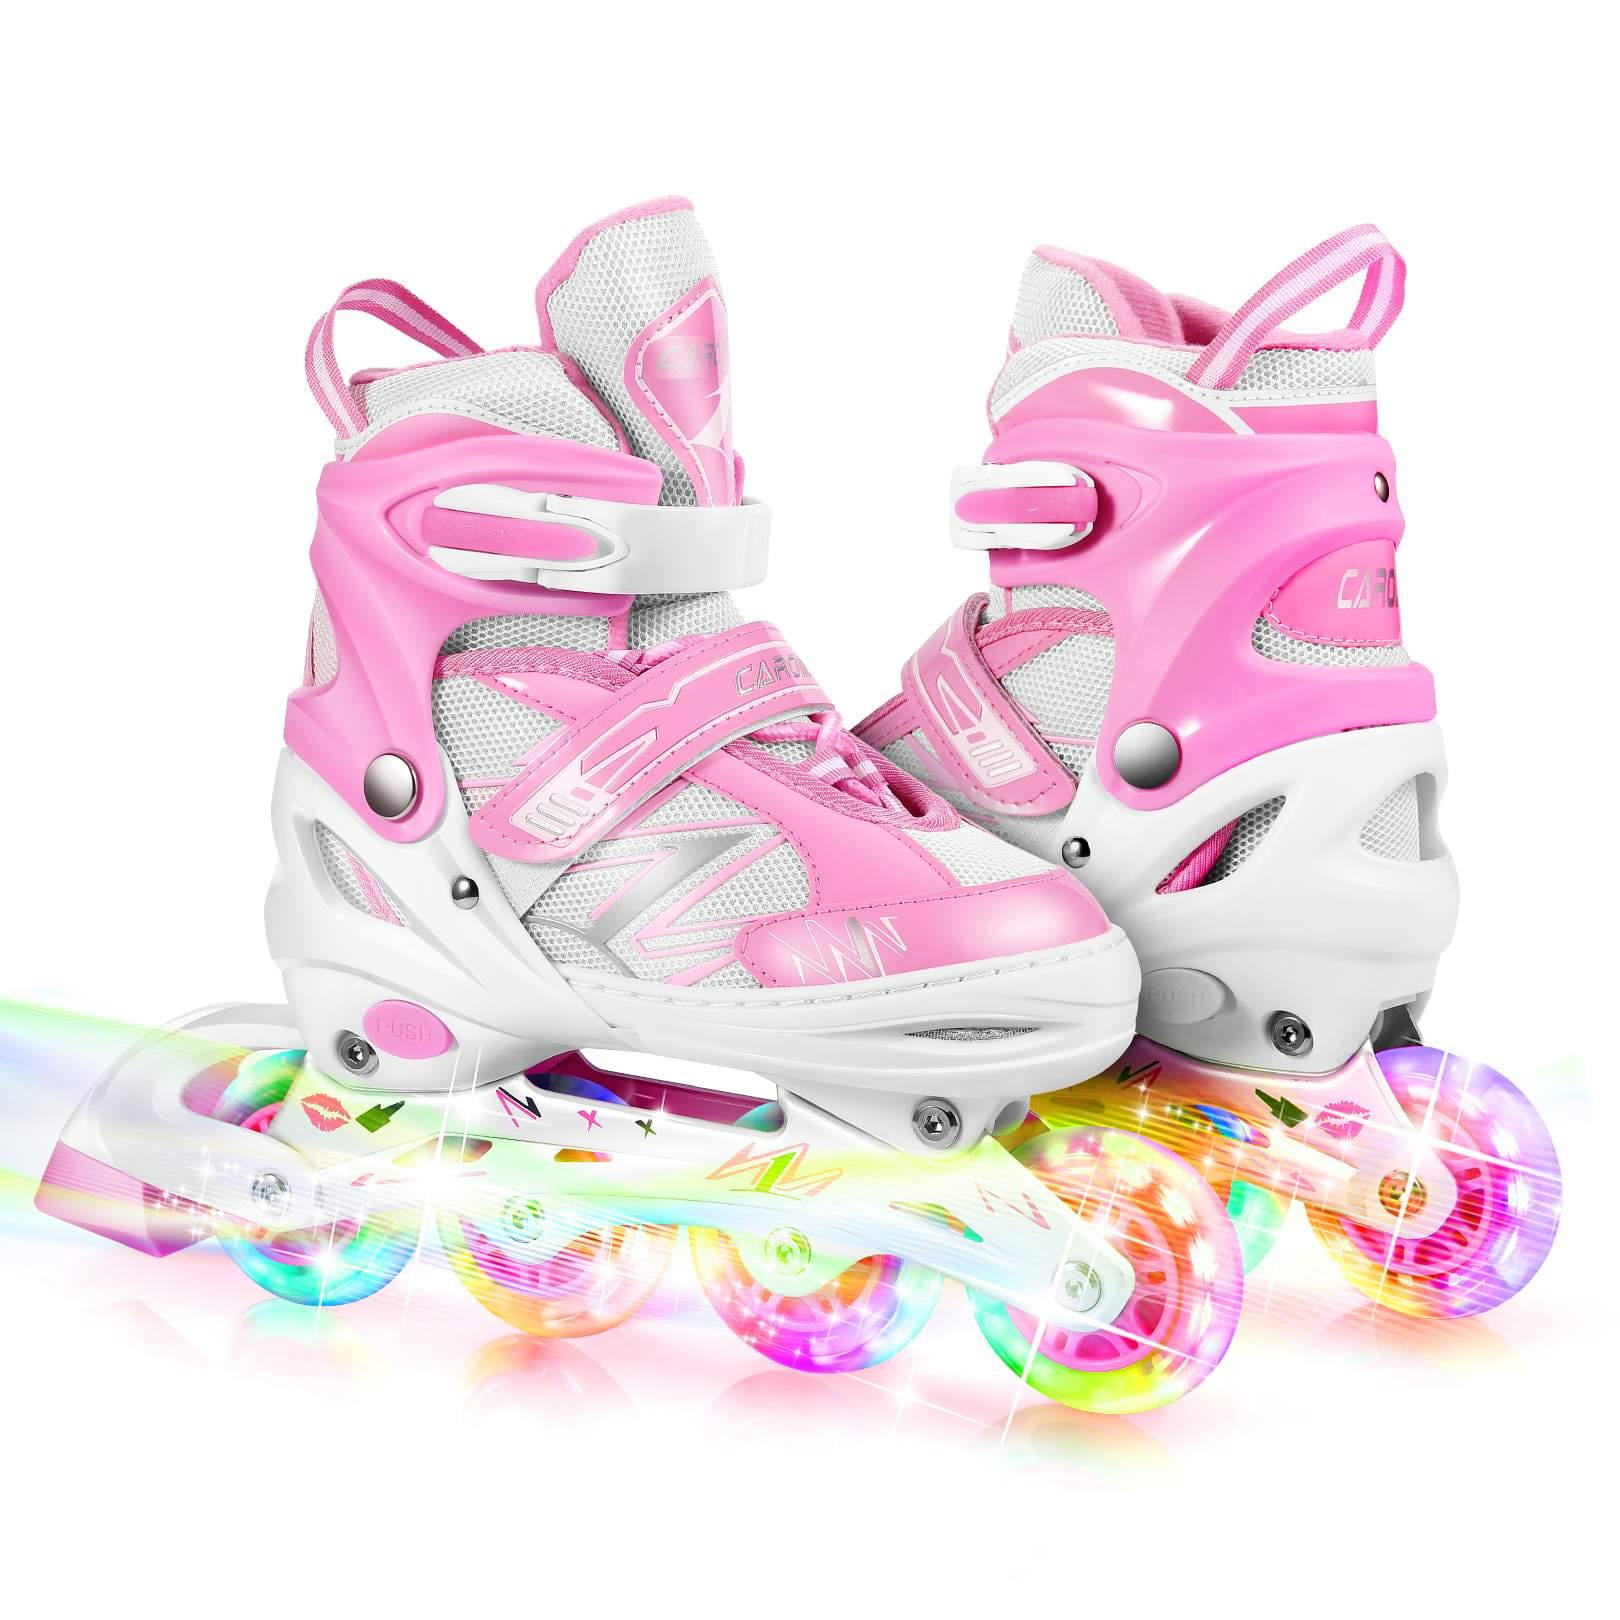 Details about   CAROMA Kids Inline Roller Skates with Light Roller Blades Adjustable Size Gift# 